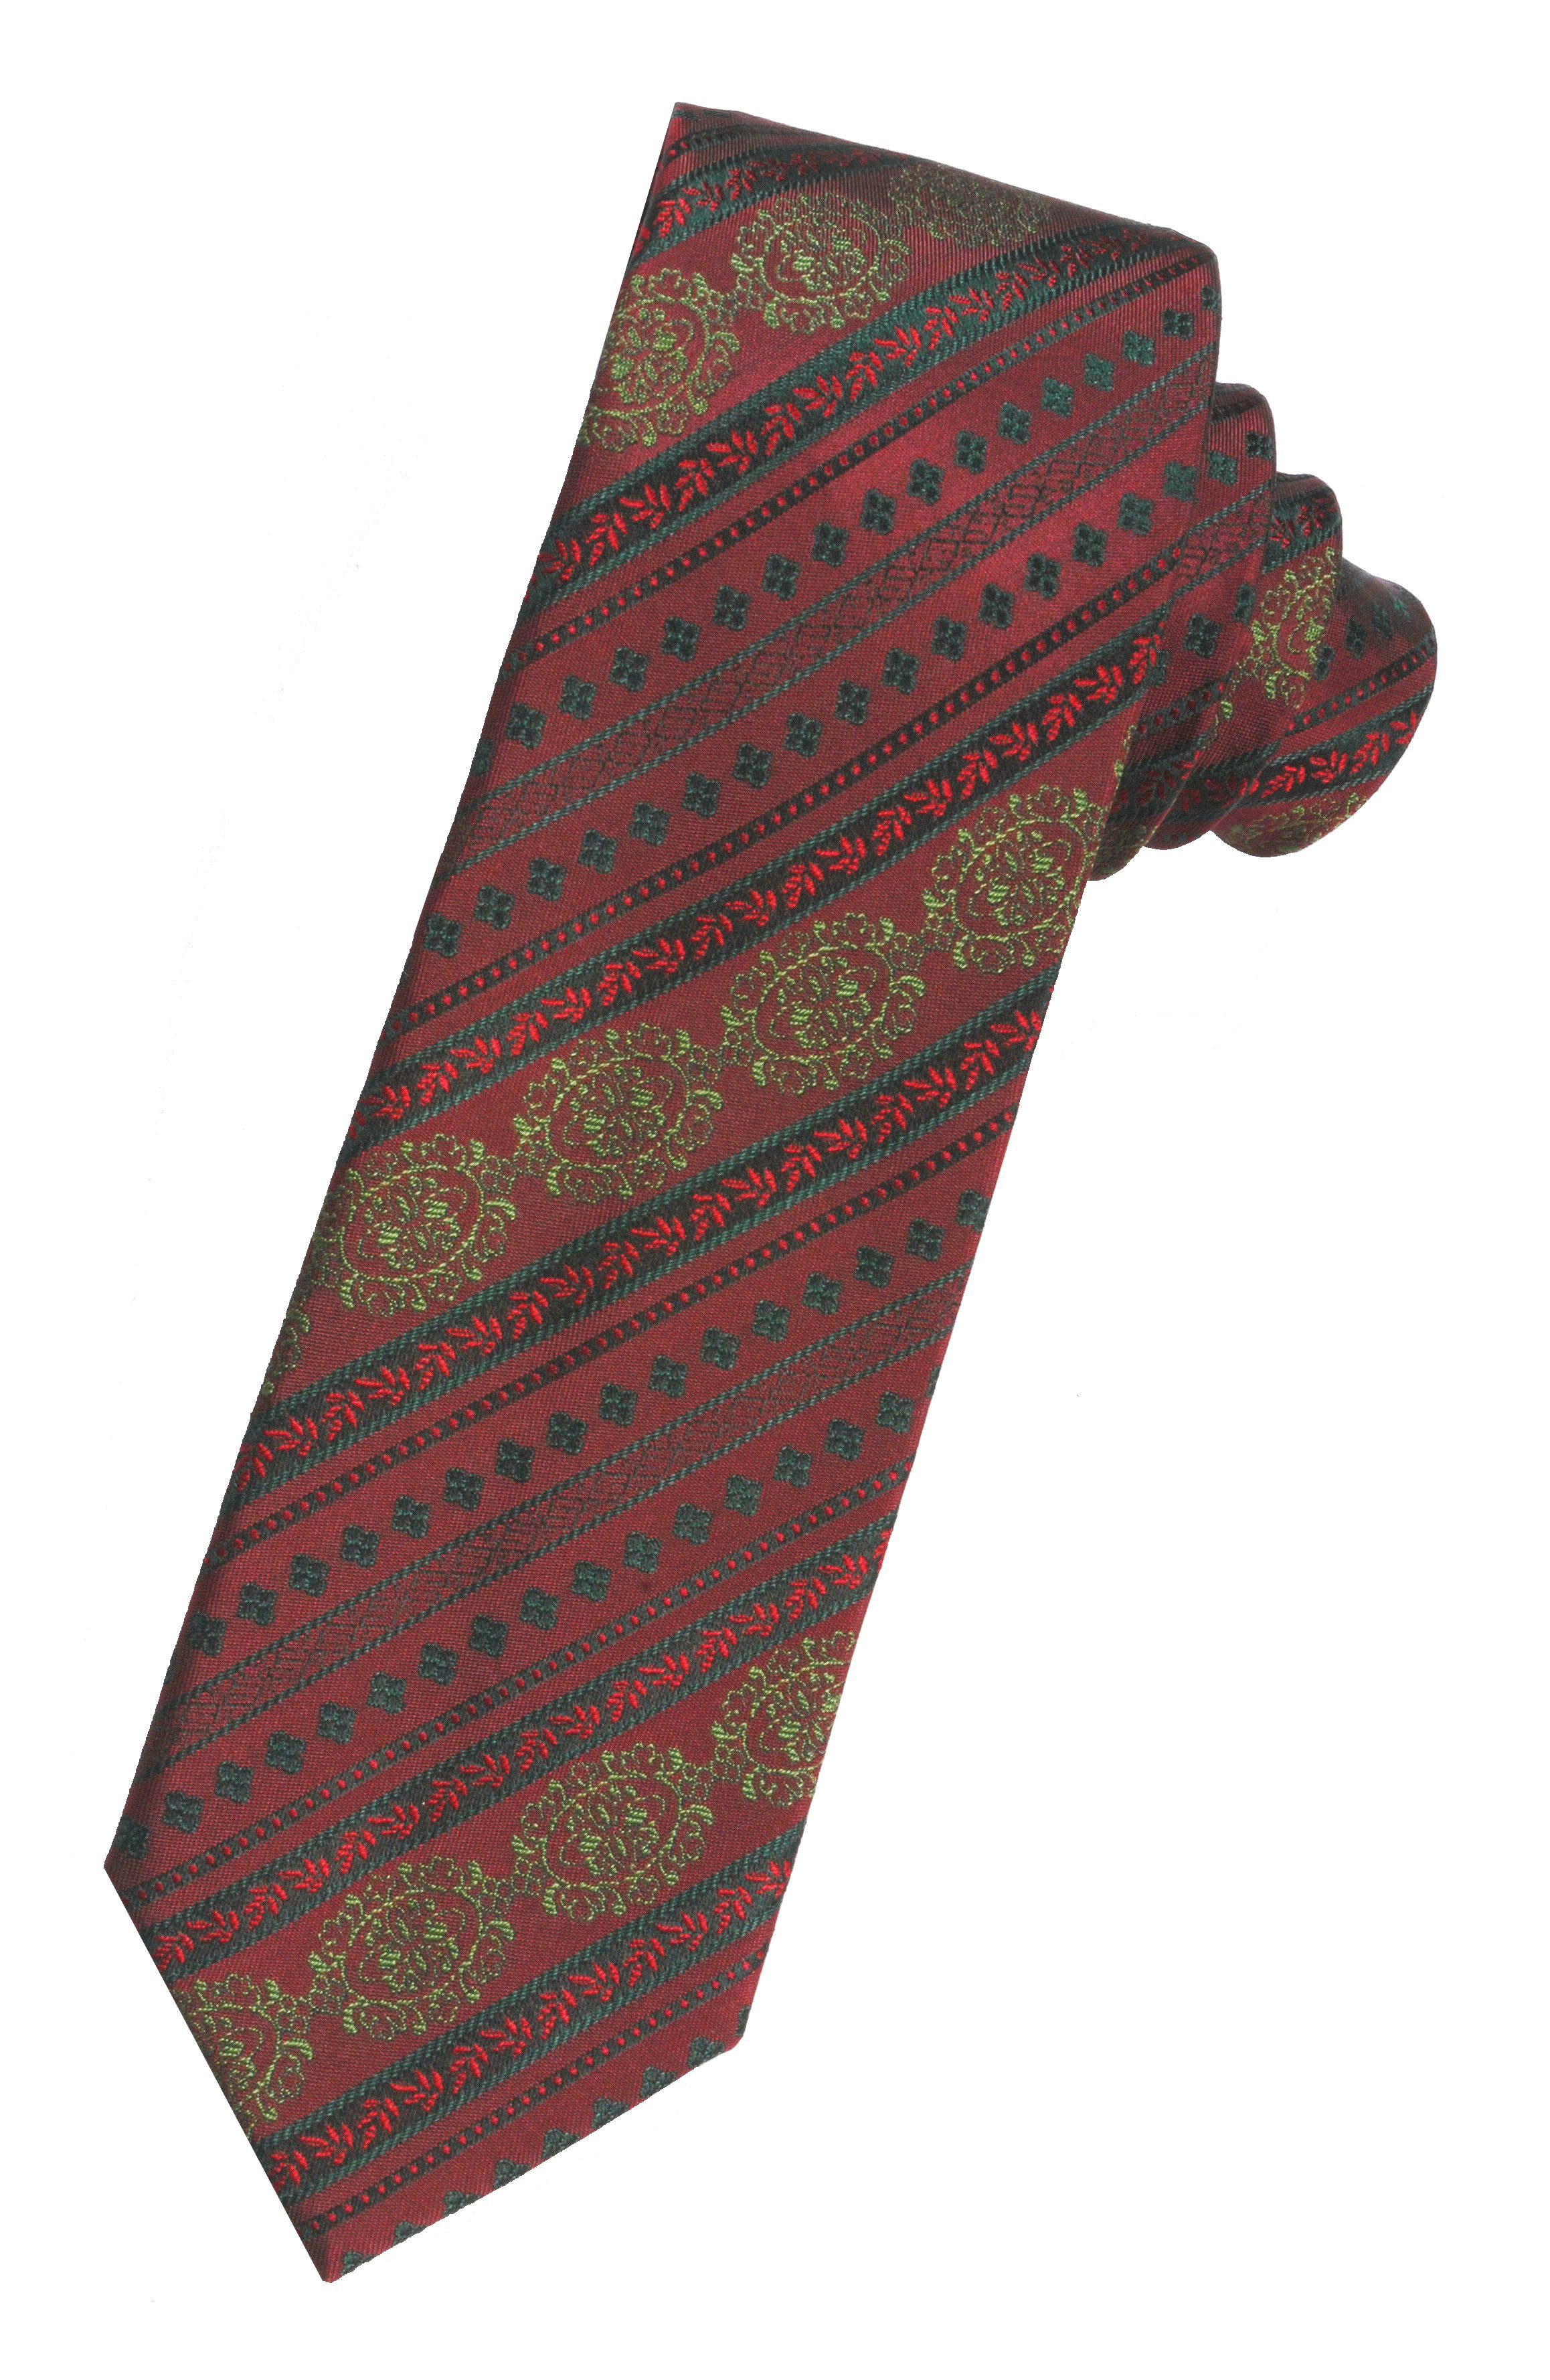 Moschen-Bayern Krawatte Trachtenkrawatte Herren Krawatte Seidenkrawatte Herrenkrawatte 100% Seide Rot-Grün edler Wiener Seiden-Jacquard